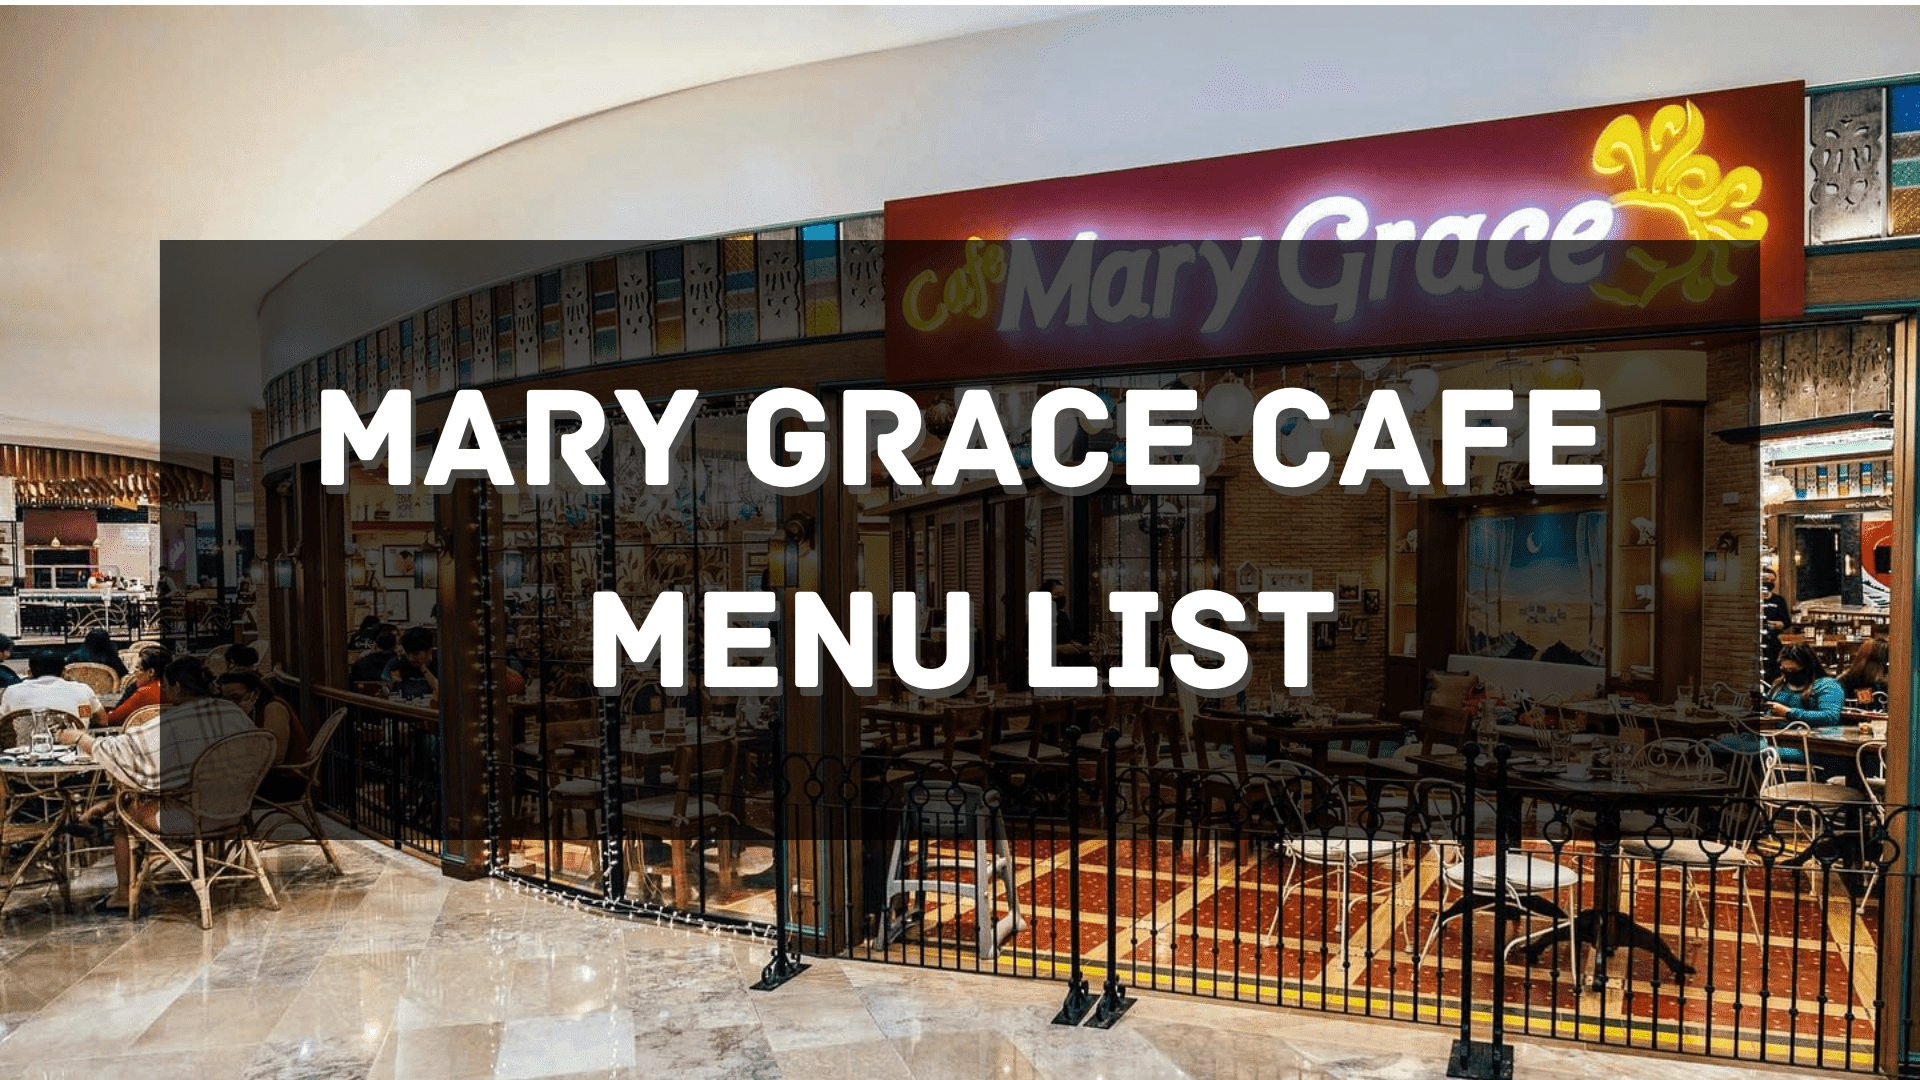 Mary Grace Cafe Menu Price